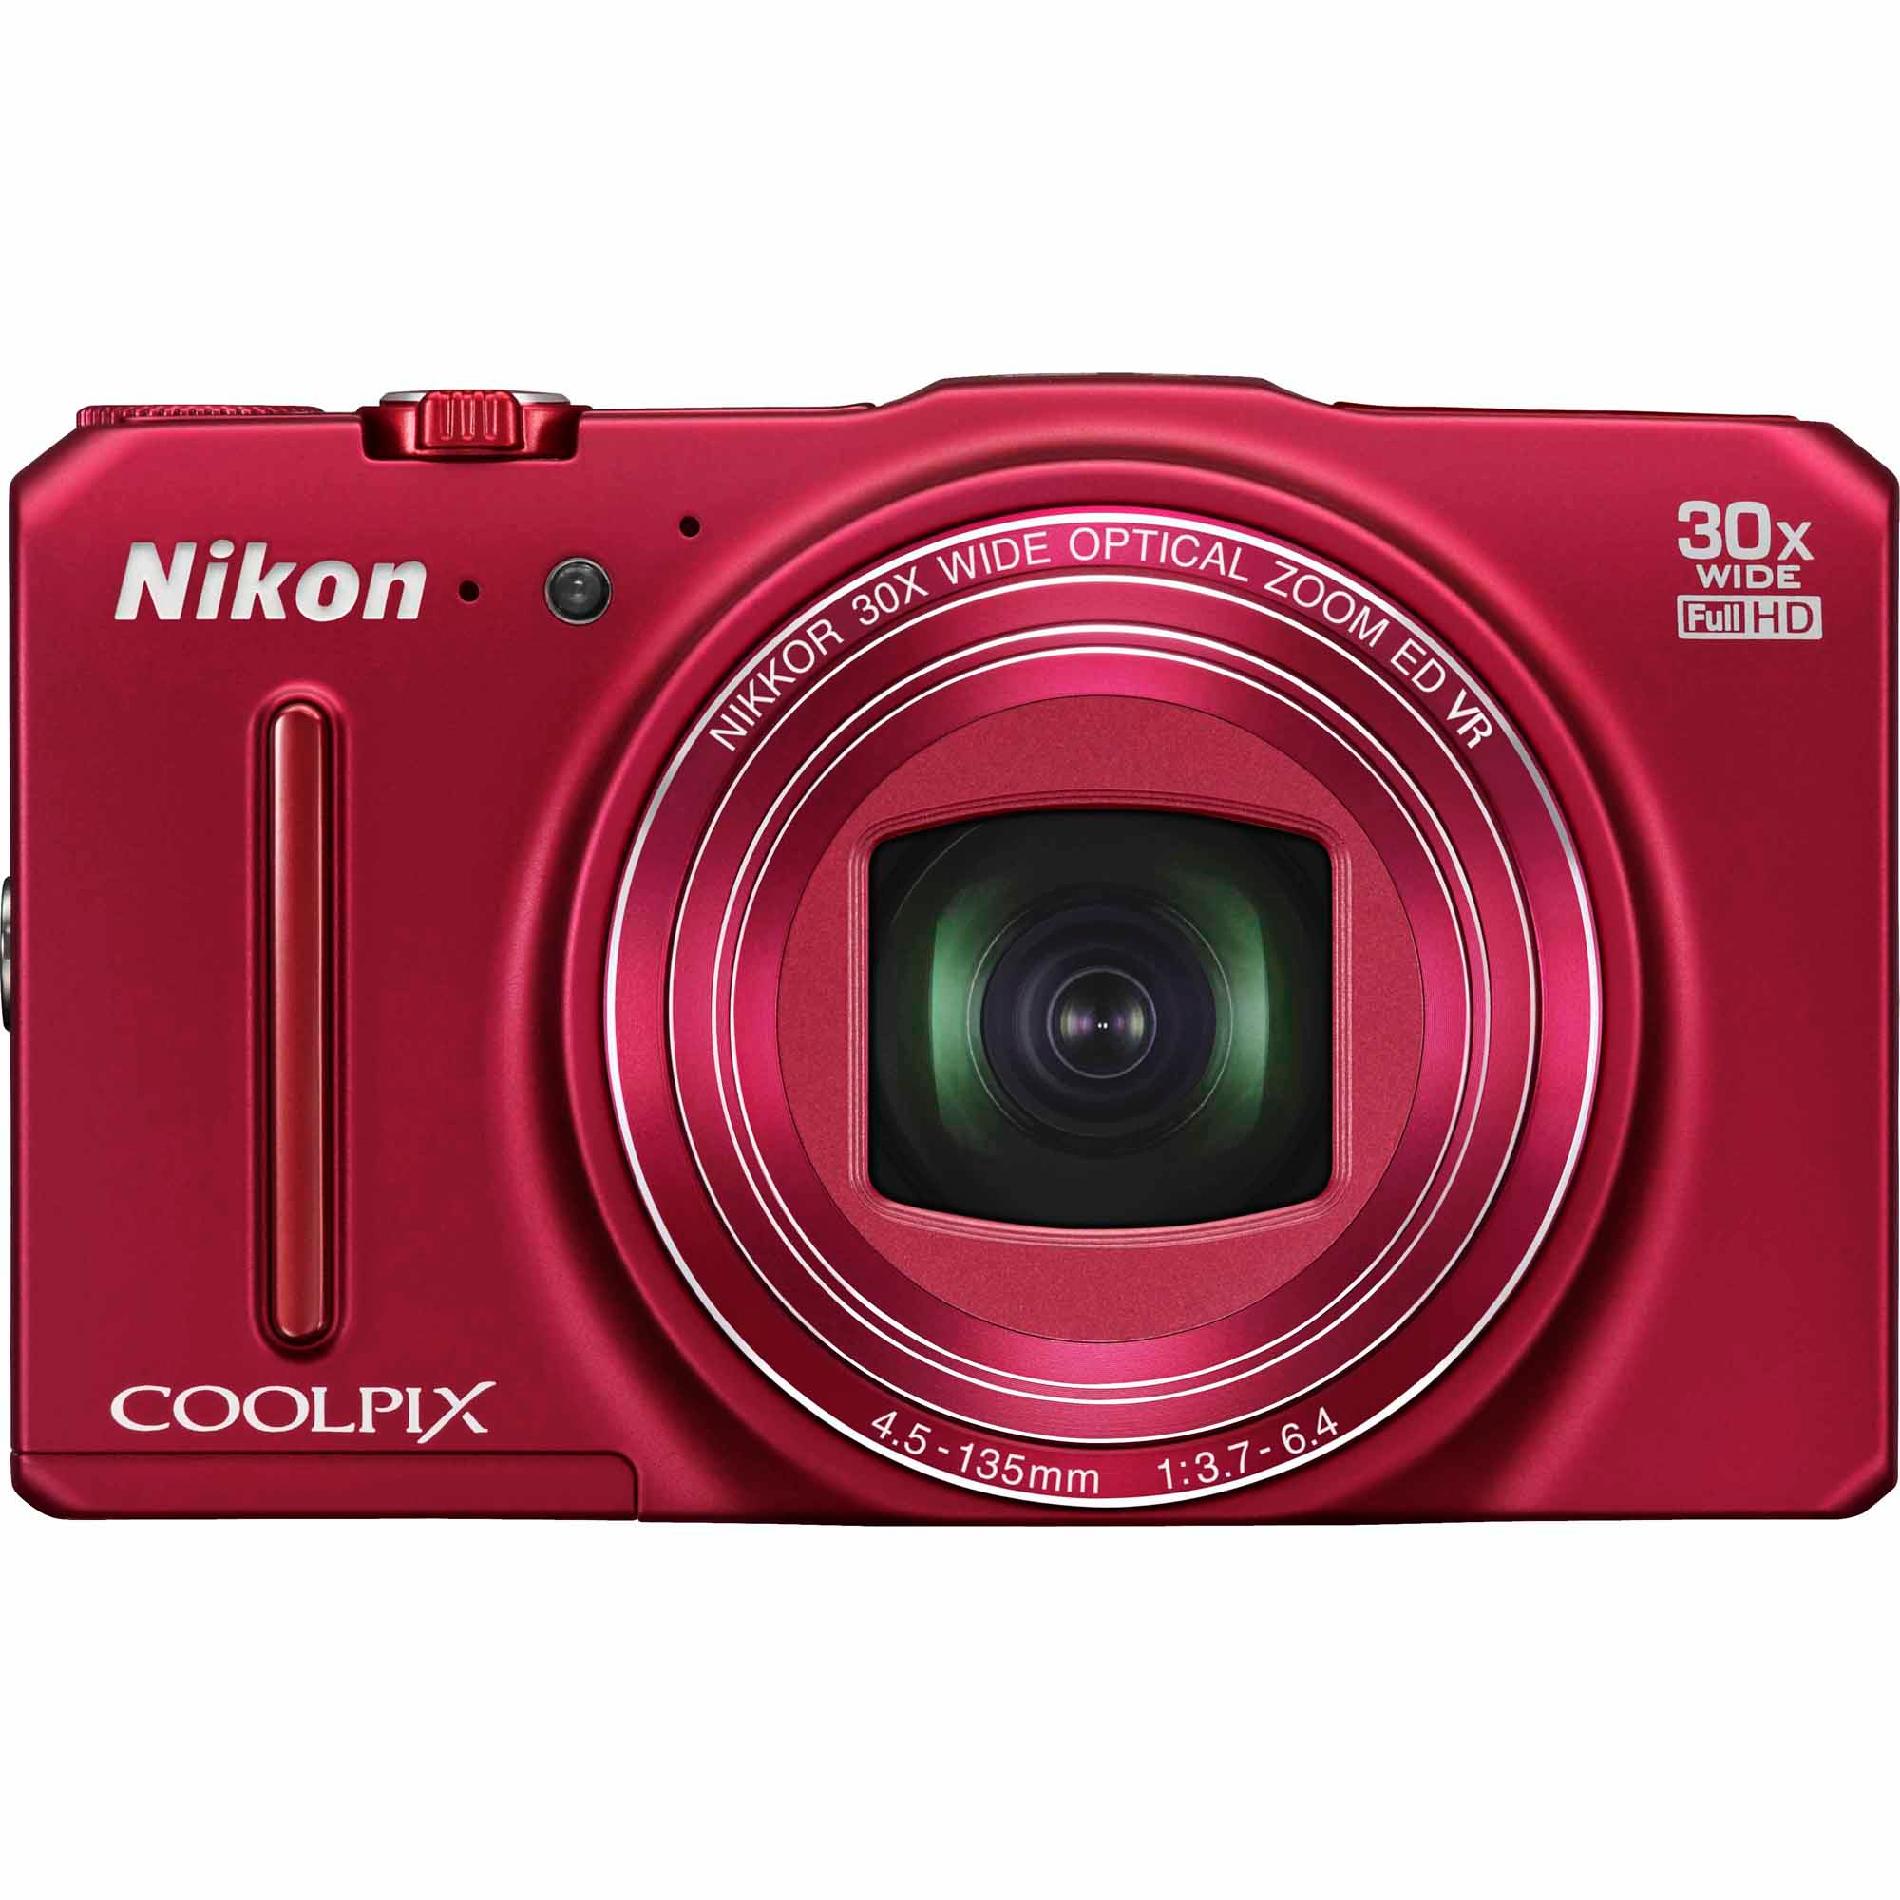 16-Megapixel Coolpix S9700 Digital Camera w/ Built-In WiFi - Red